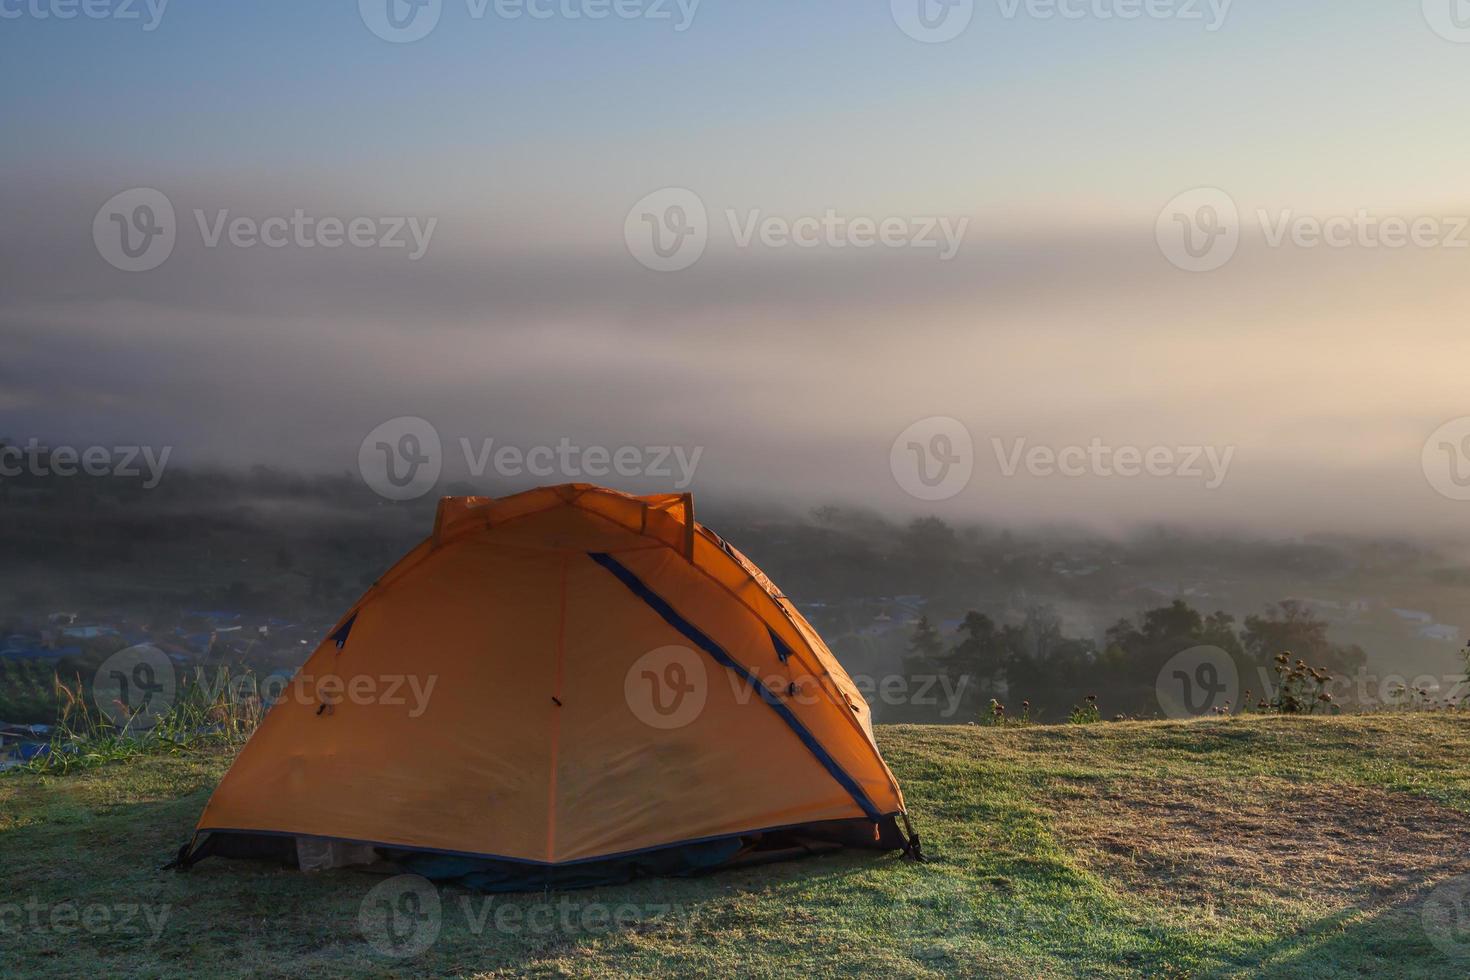 Orange tent at sunrise photo